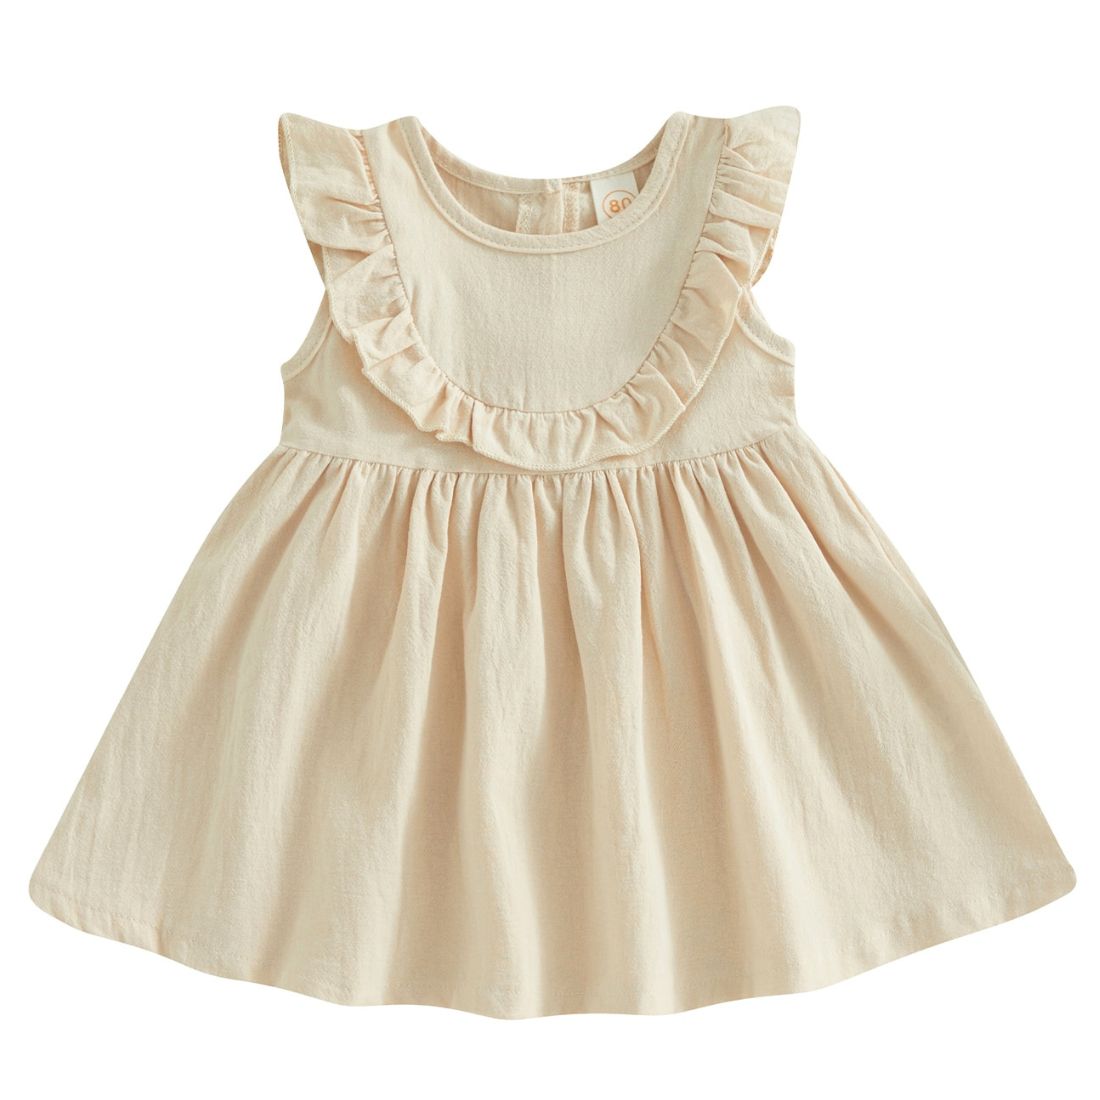 Ruffle Casual Toddler Beige Dress